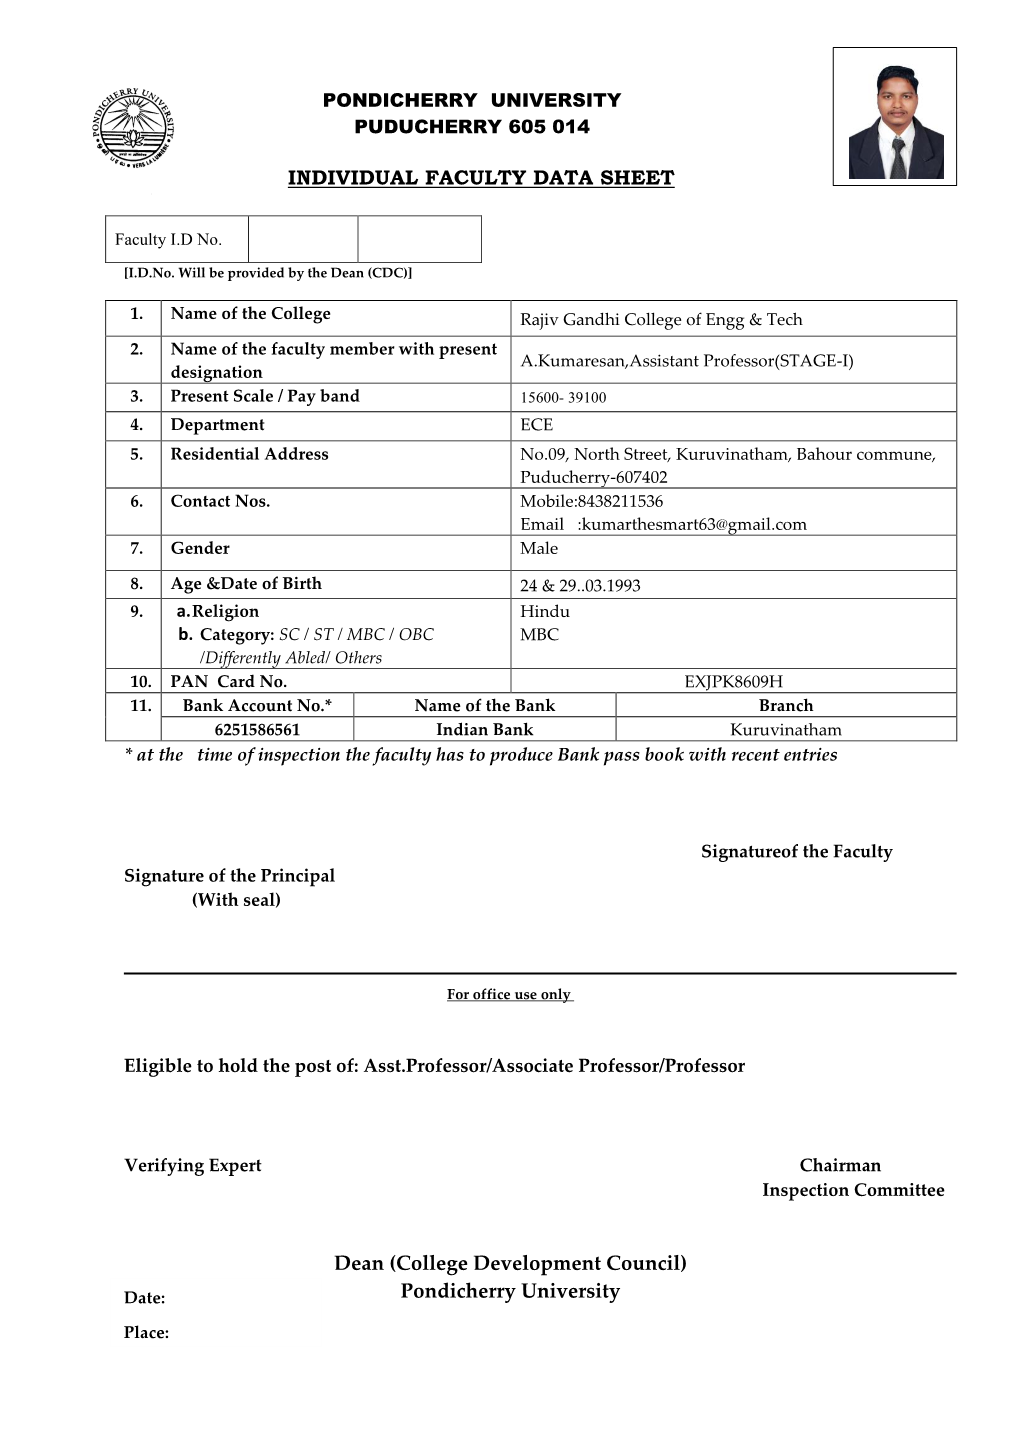 Pondicherry University Puducherry 605 014